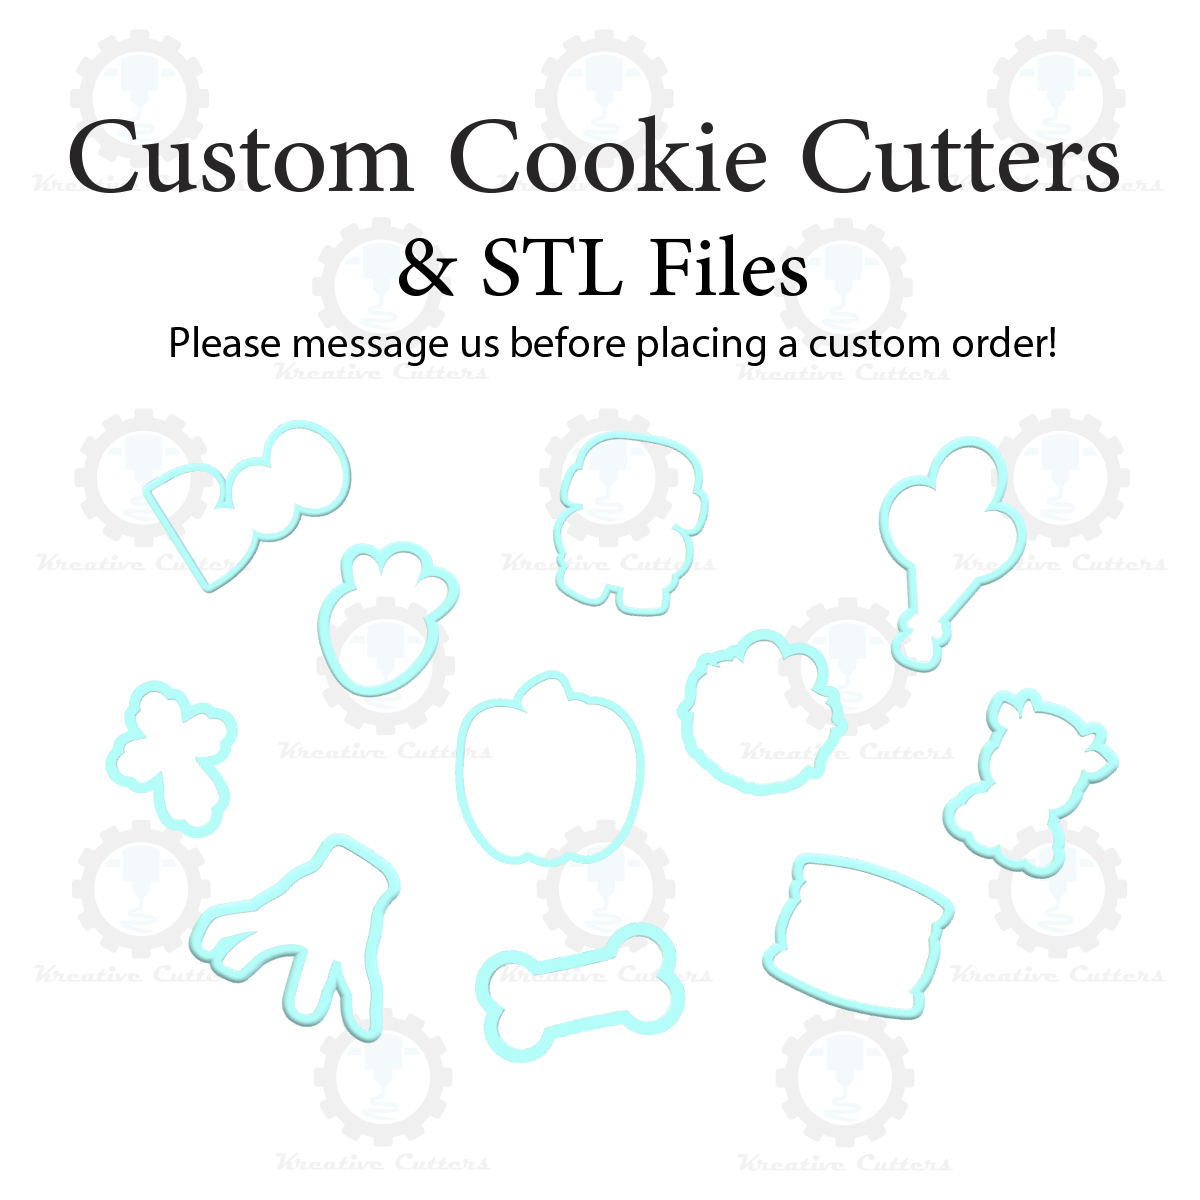 Custom Cookie Cutters & STL Files